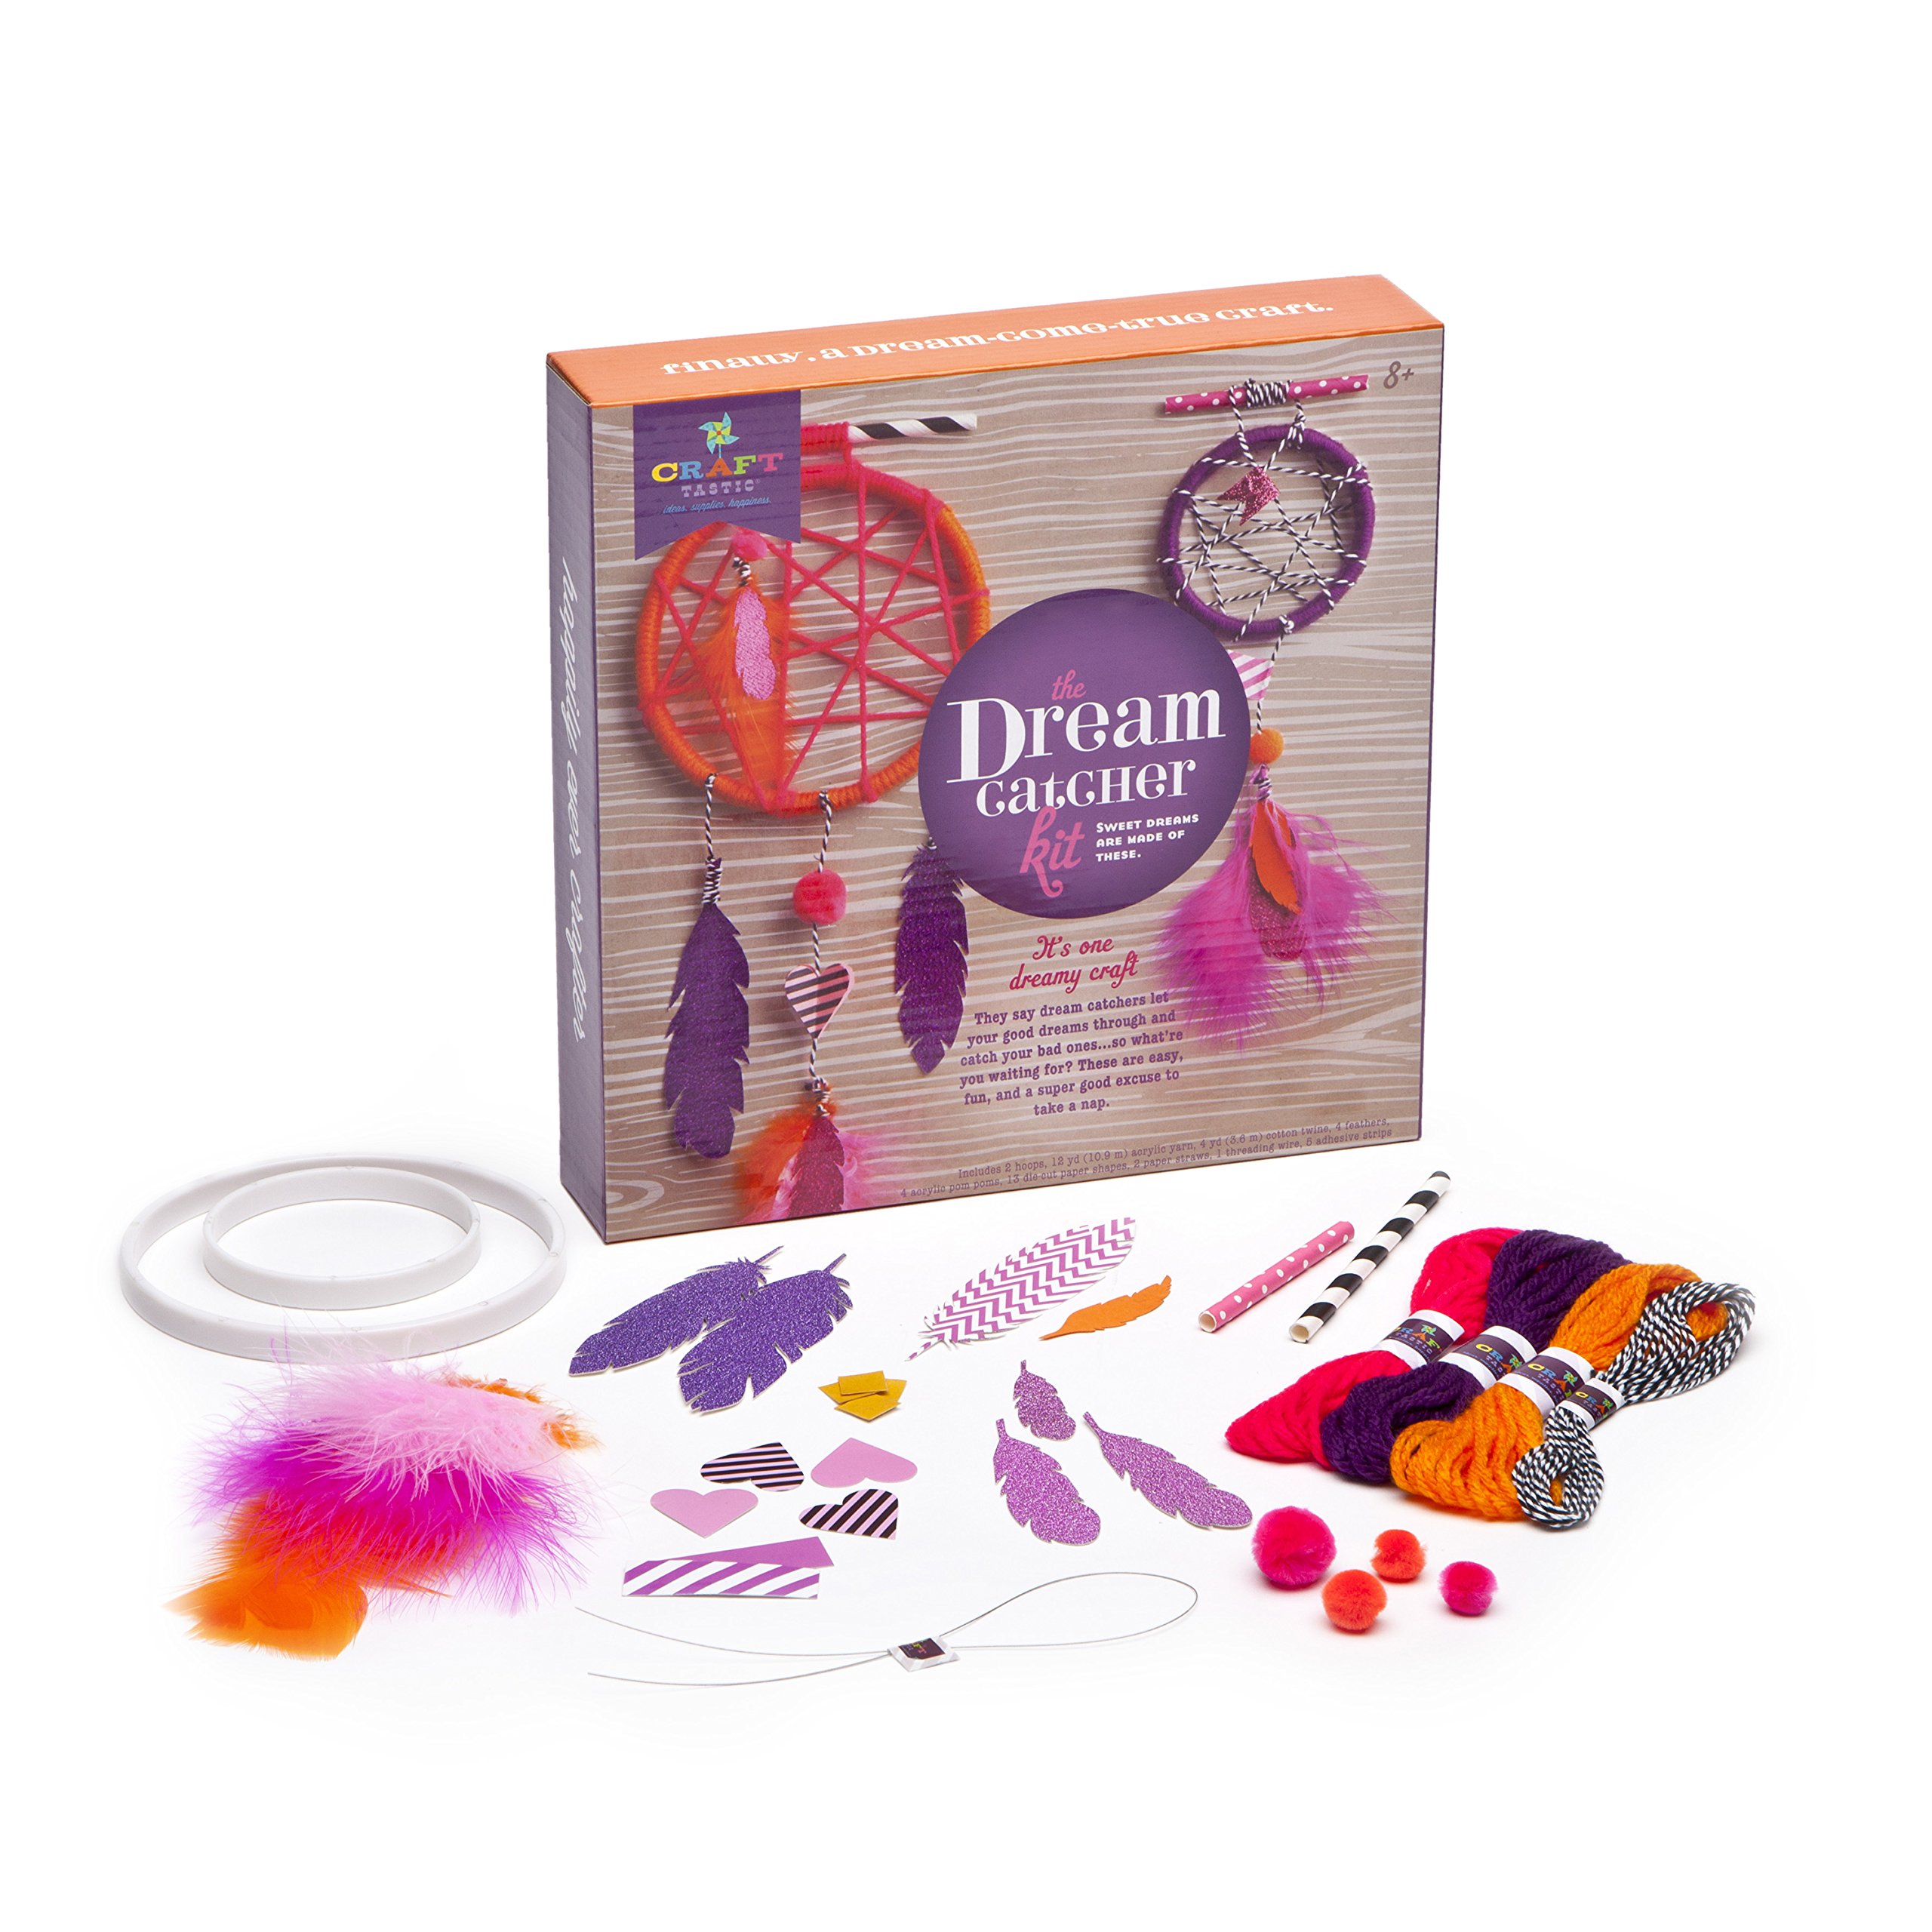 Craft-tastic – Dream Catcher Kit – Craft Kit Makes 2 Dream Catchers